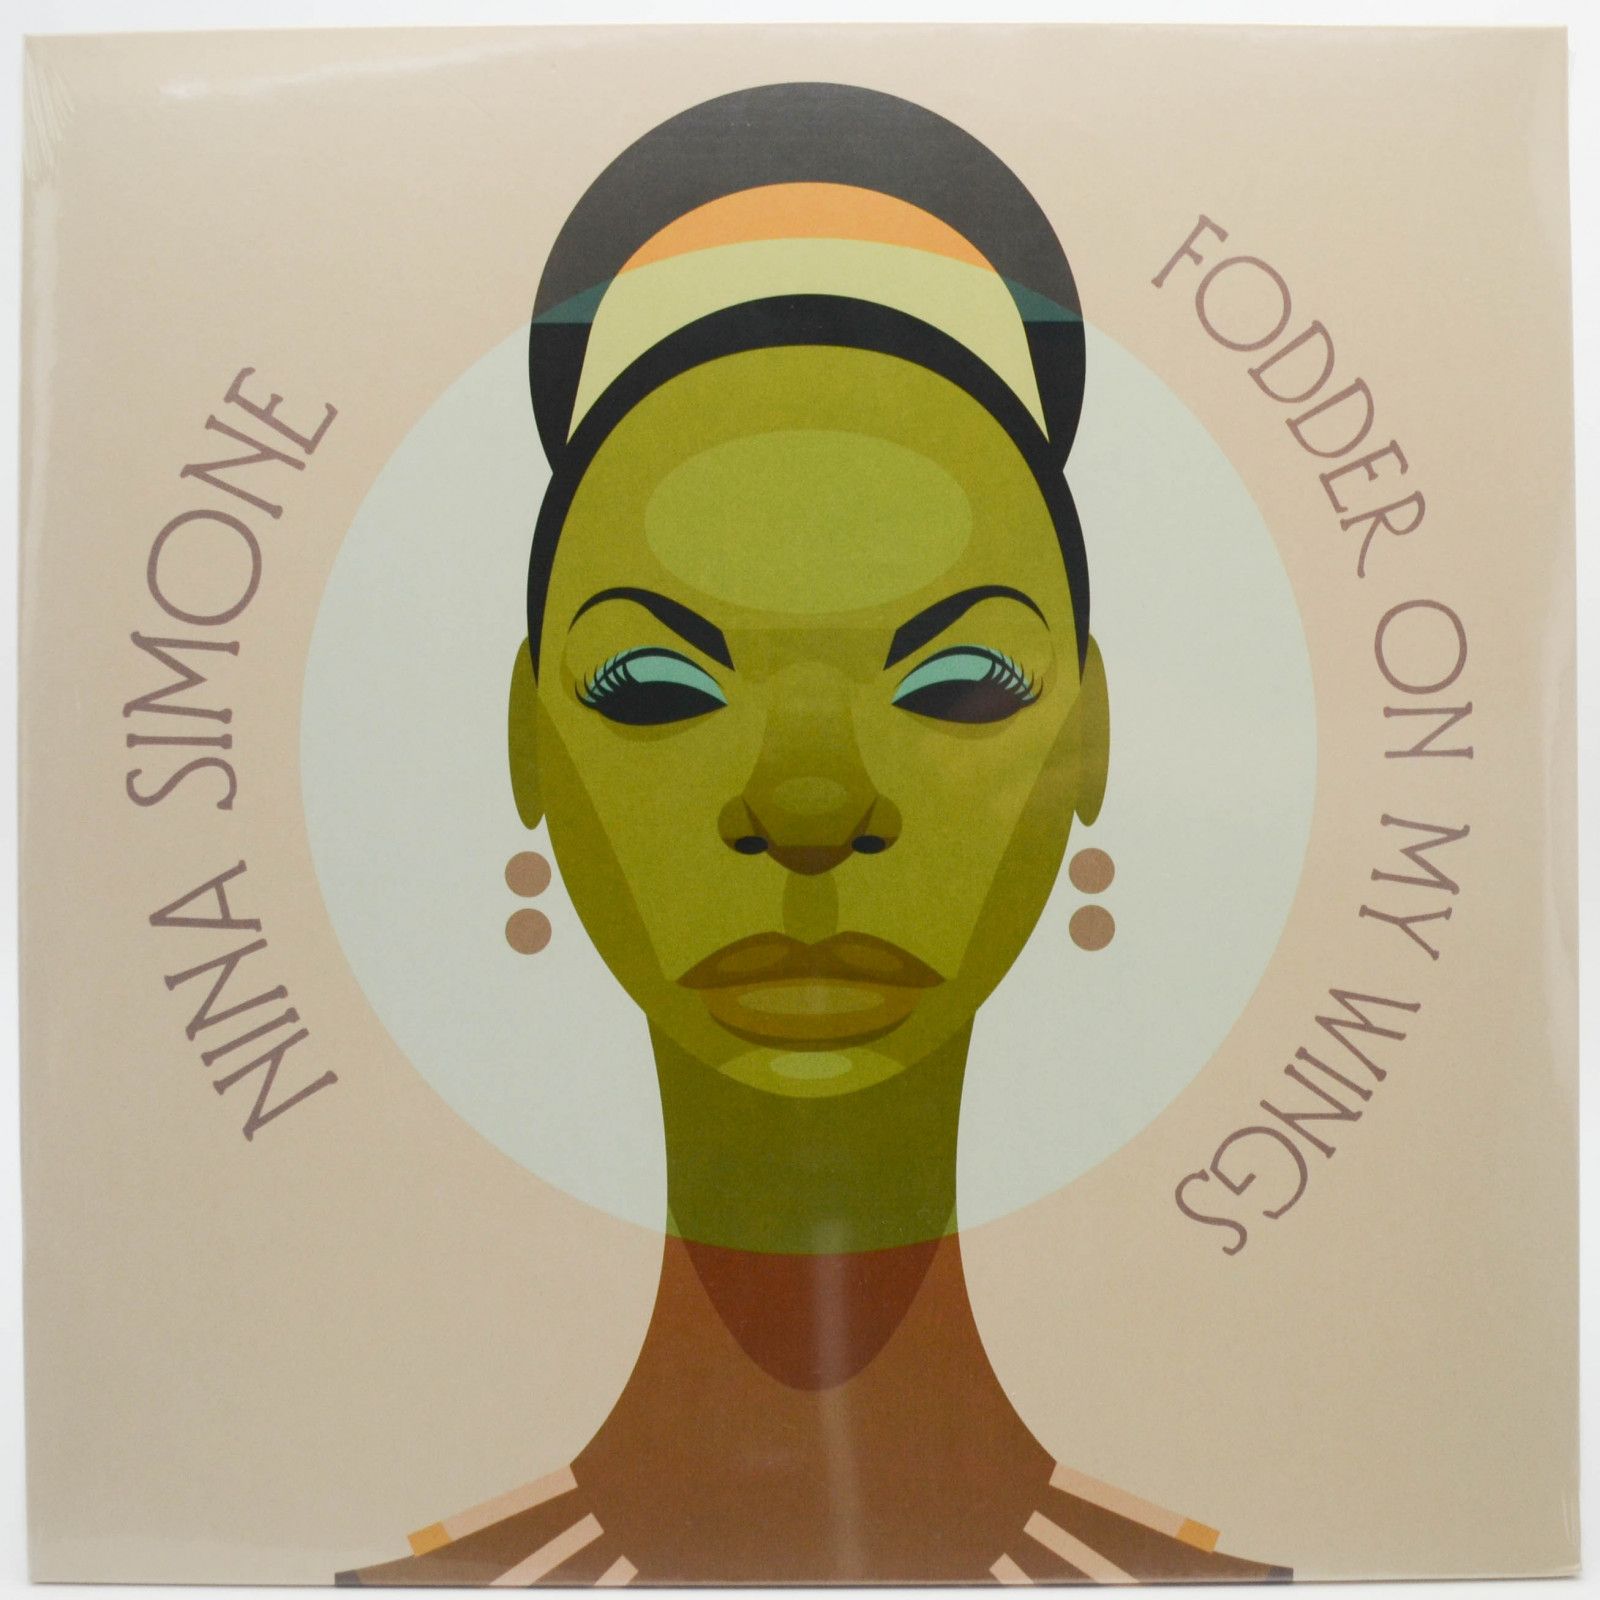 Nina Simone — Fodder On My Wings, 1982